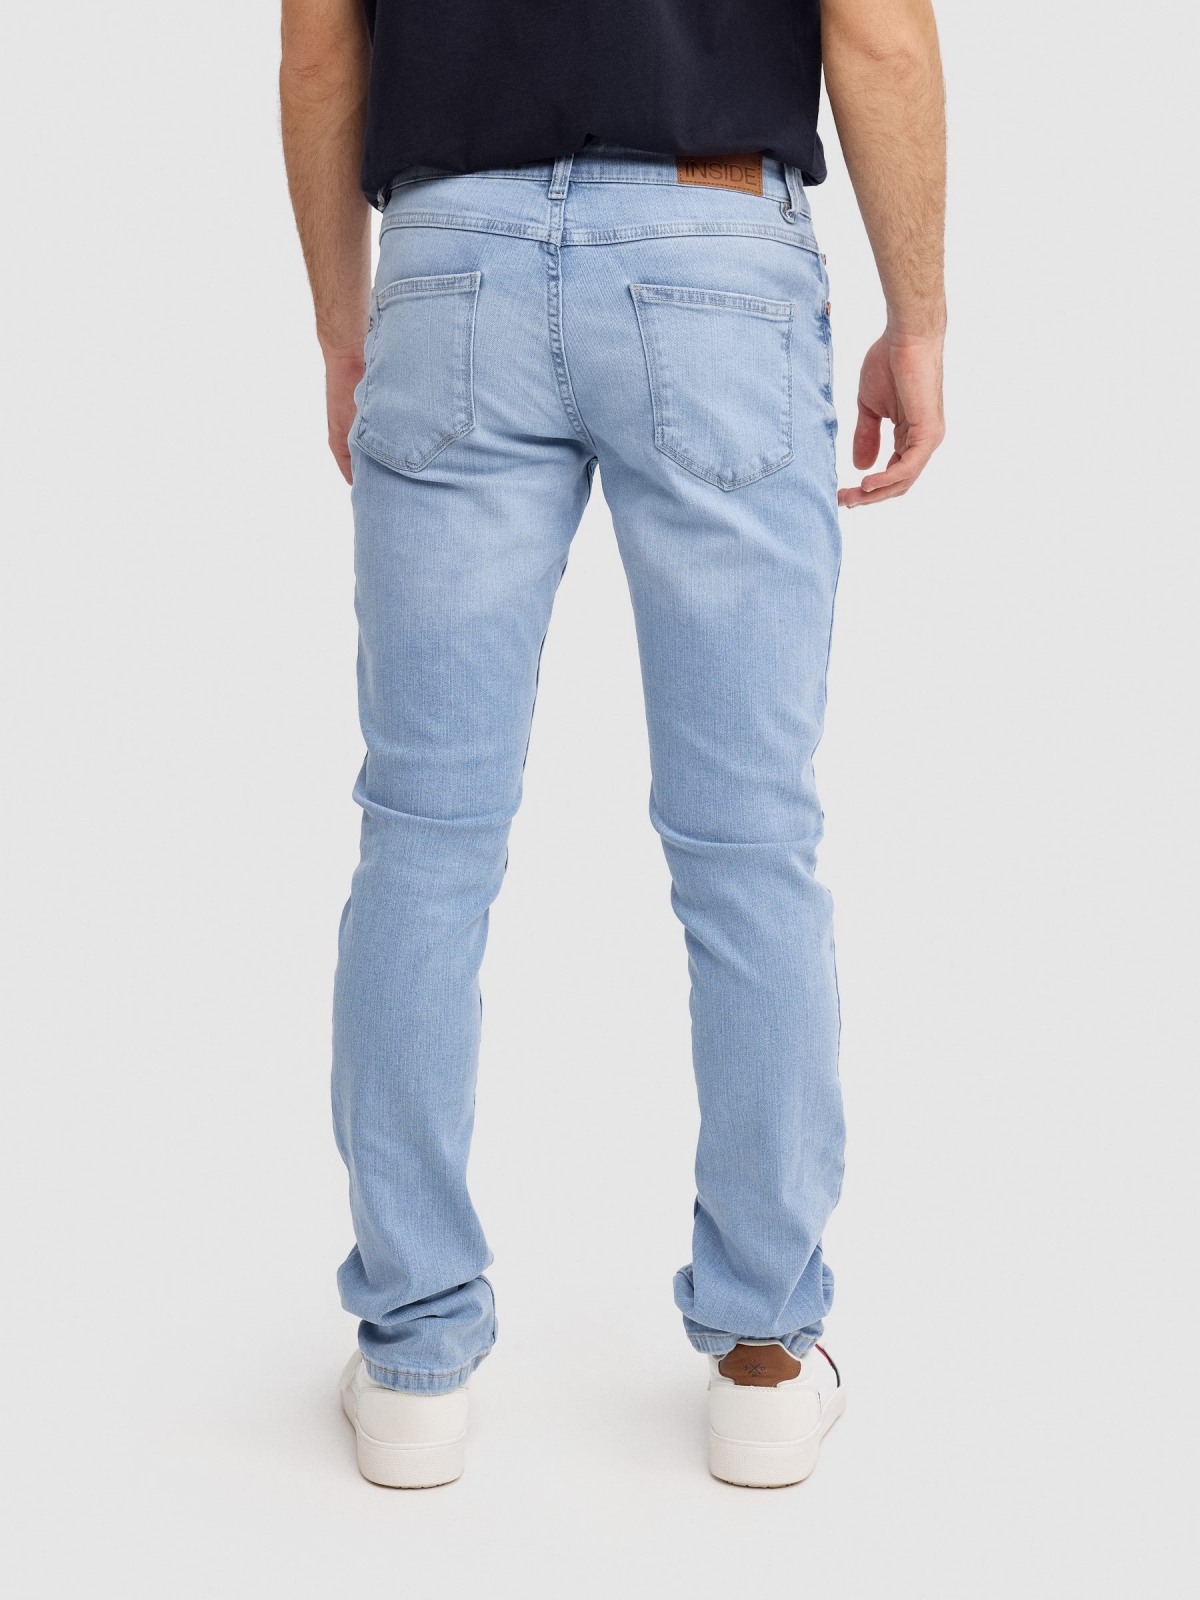 Jeans regular azul claro lavado tenue muslo azul vista media trasera